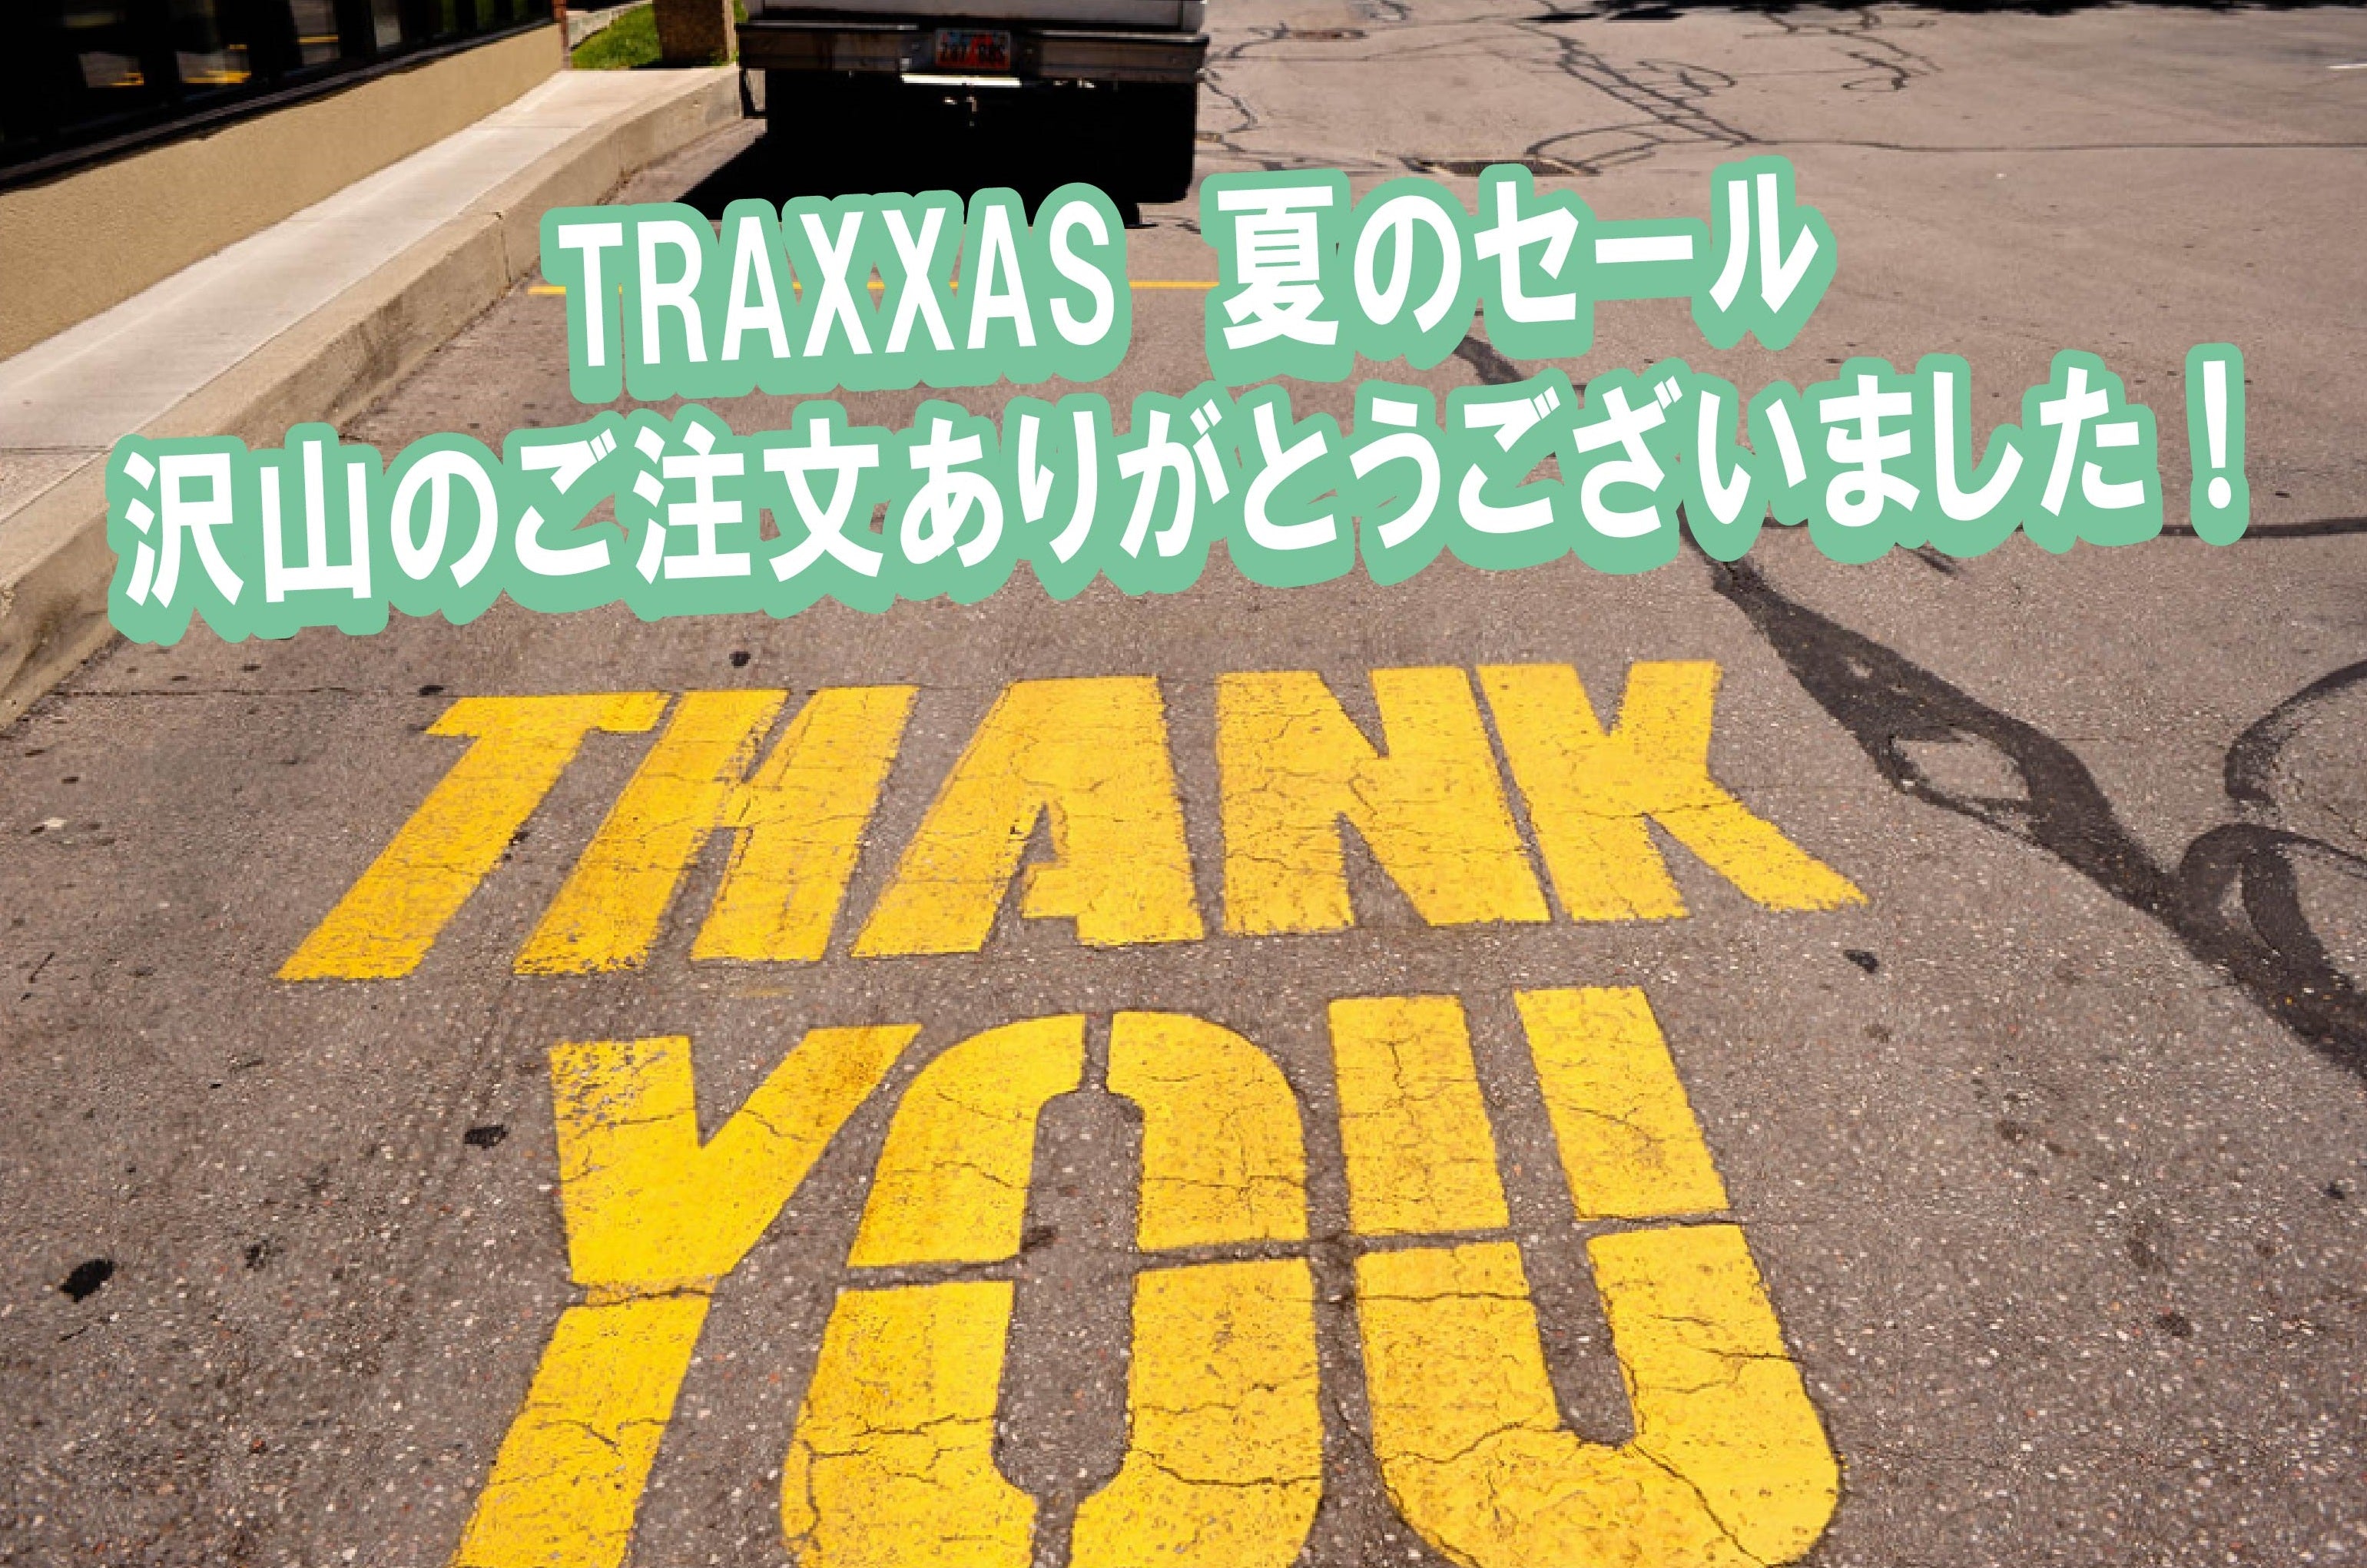 TRAXXAS夏のセール終了のご案内　沢山のご注文頂き誠にありがとうございました！